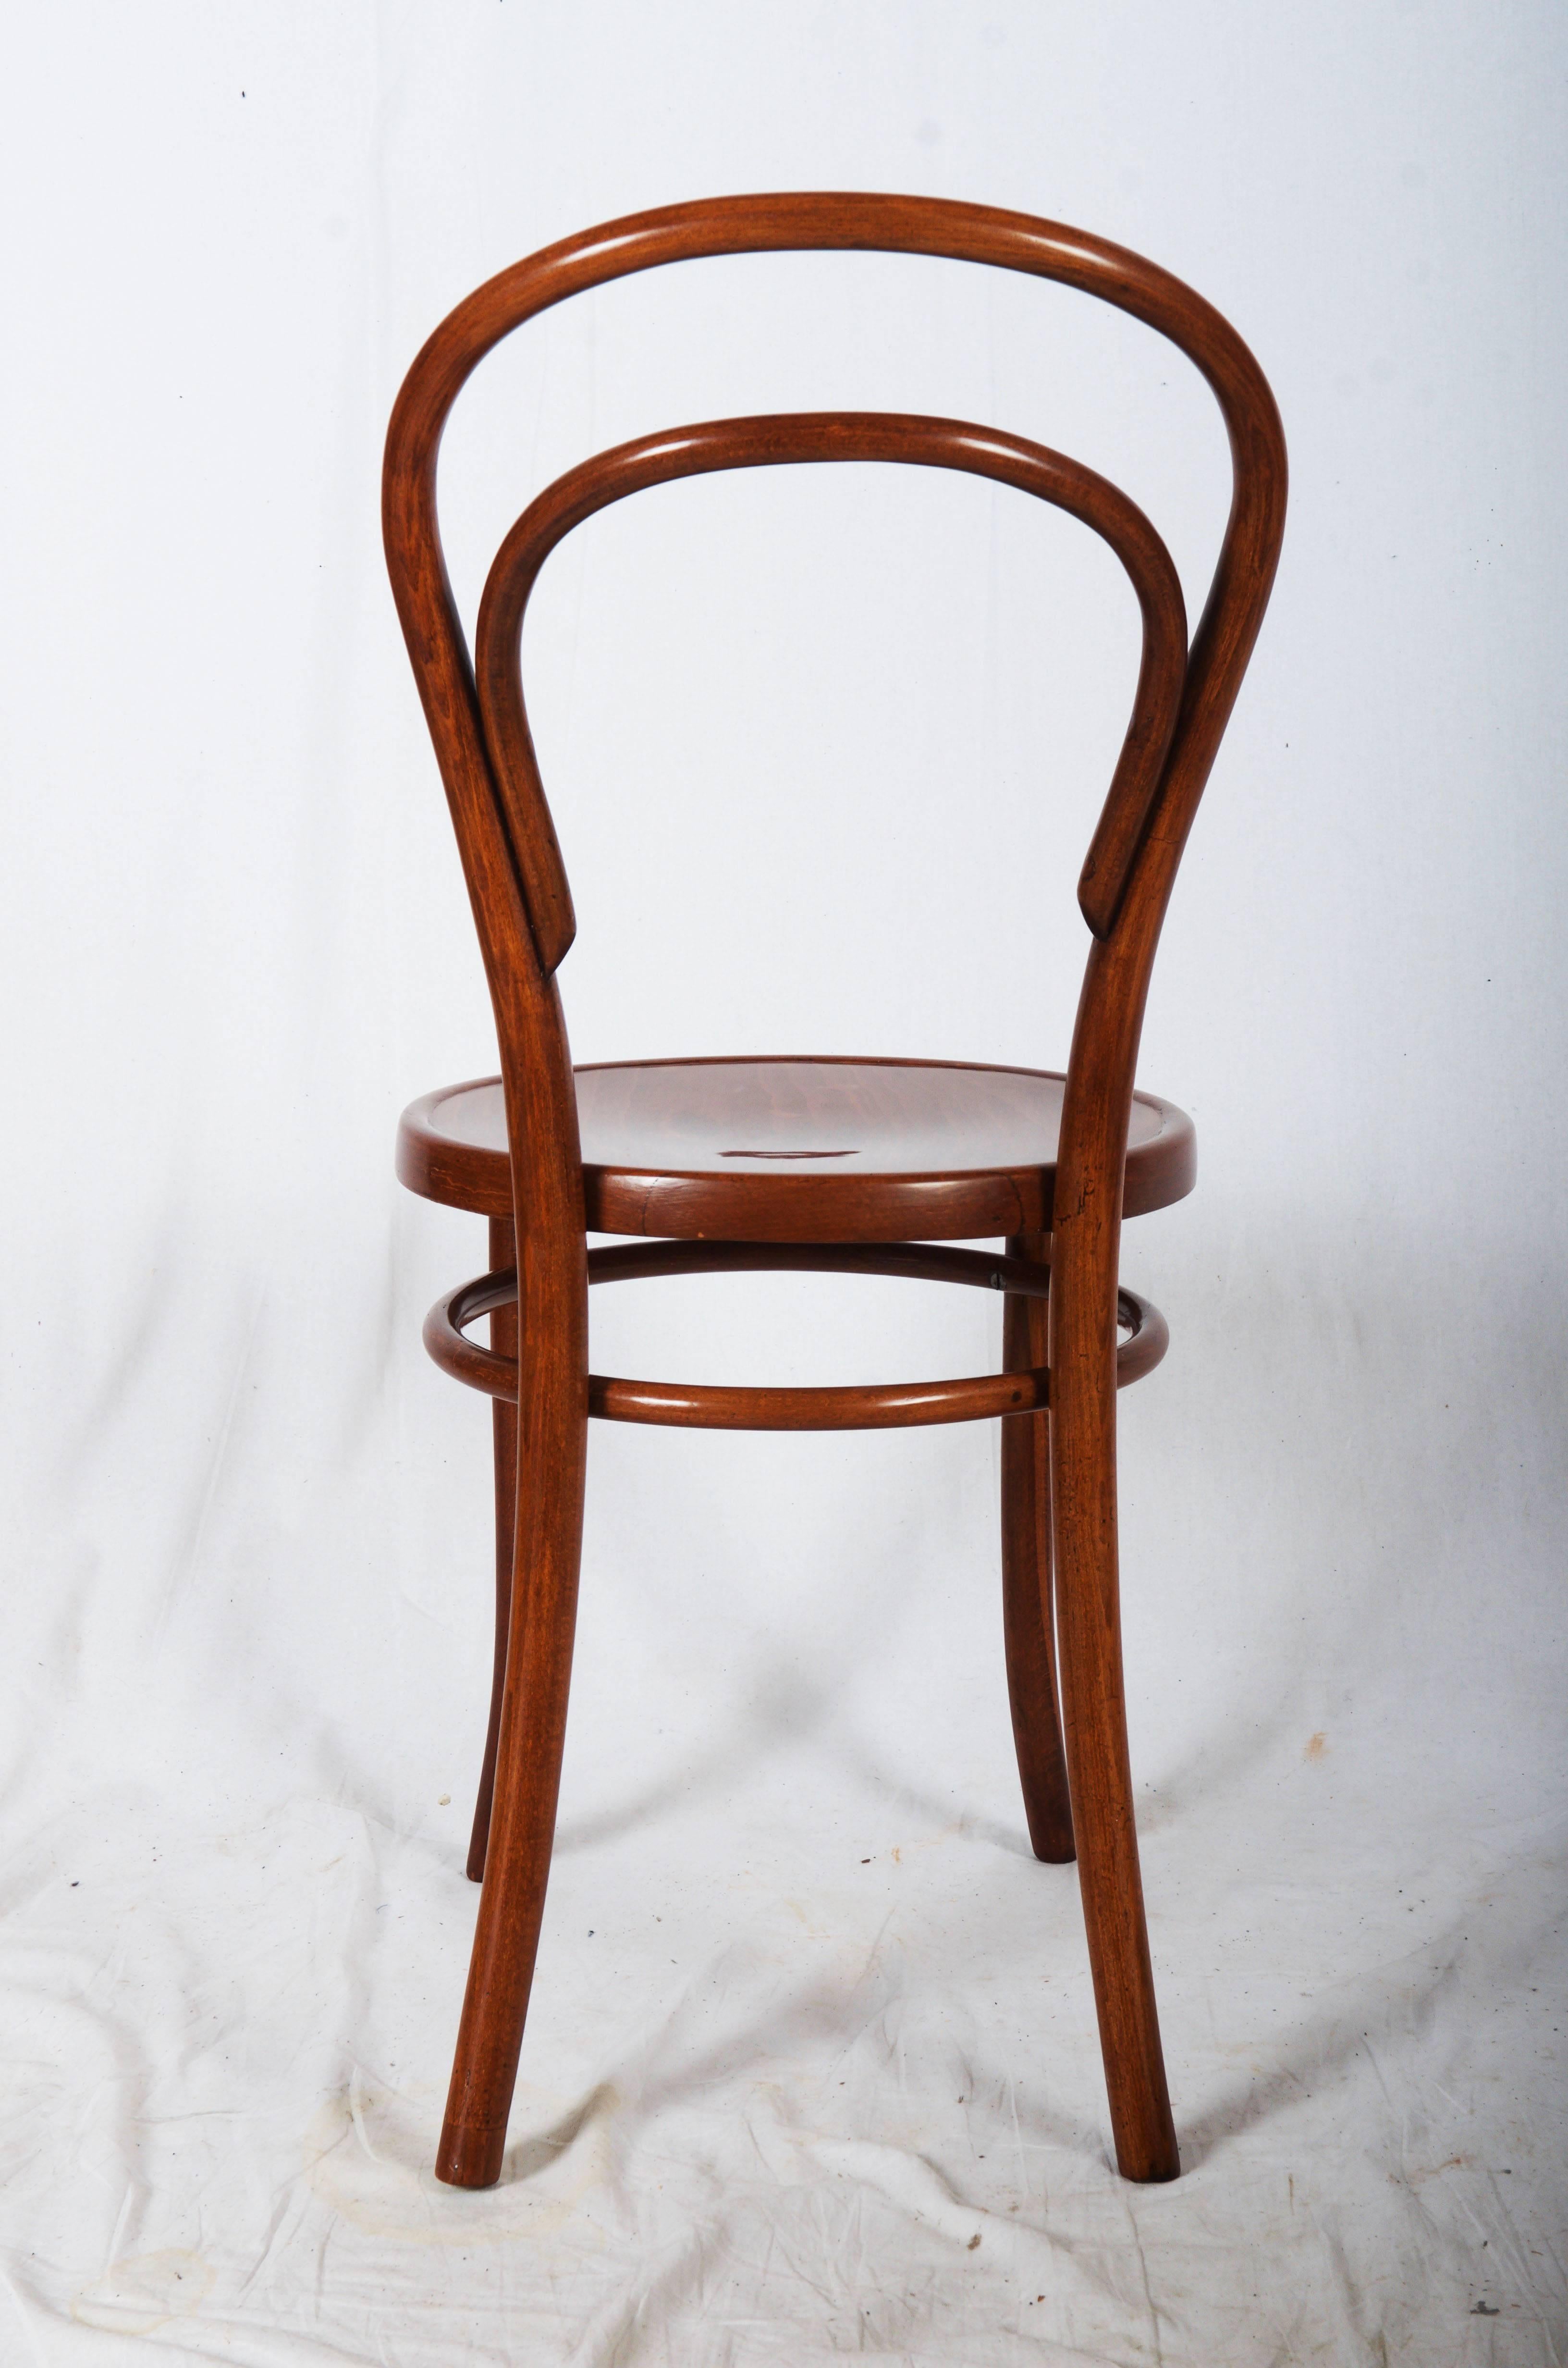 Vienna Secession Classic Thonet No. 14 Chair